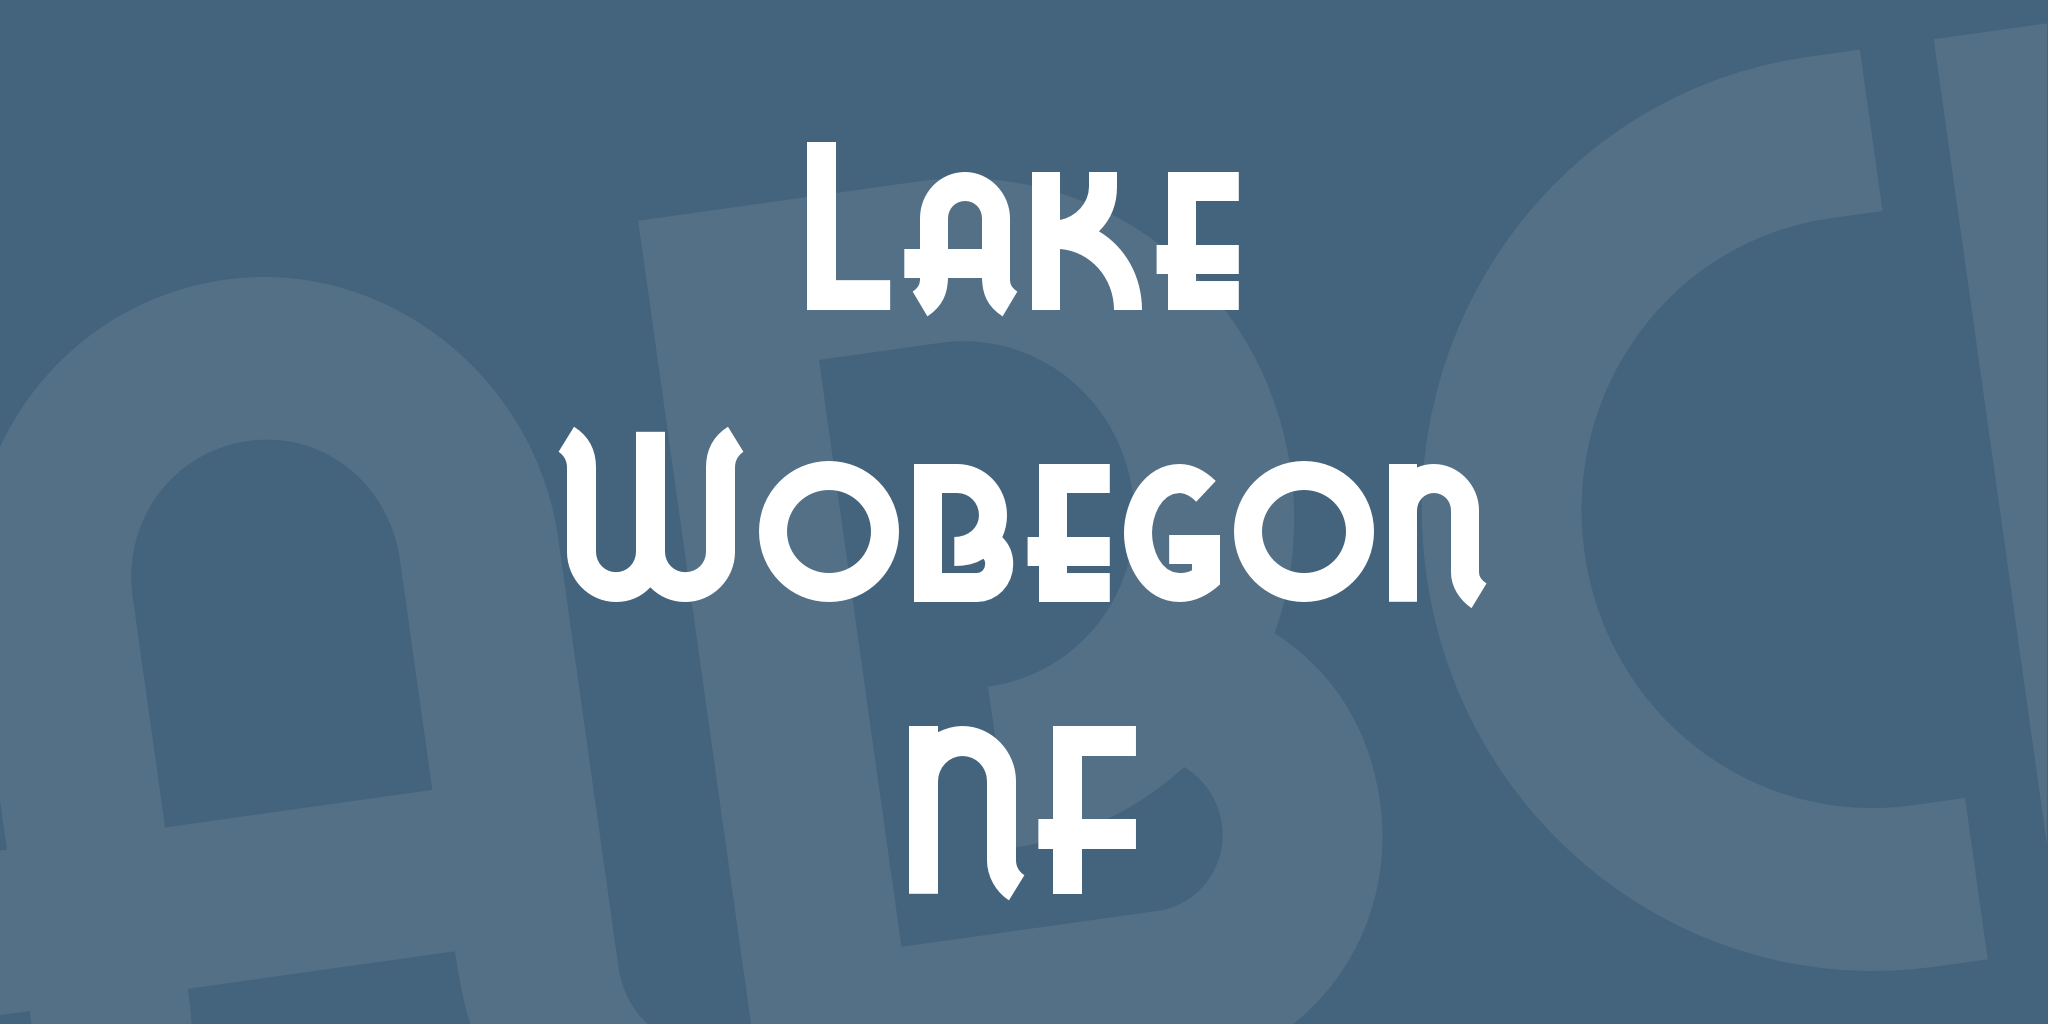 Lake Wobegon Nf